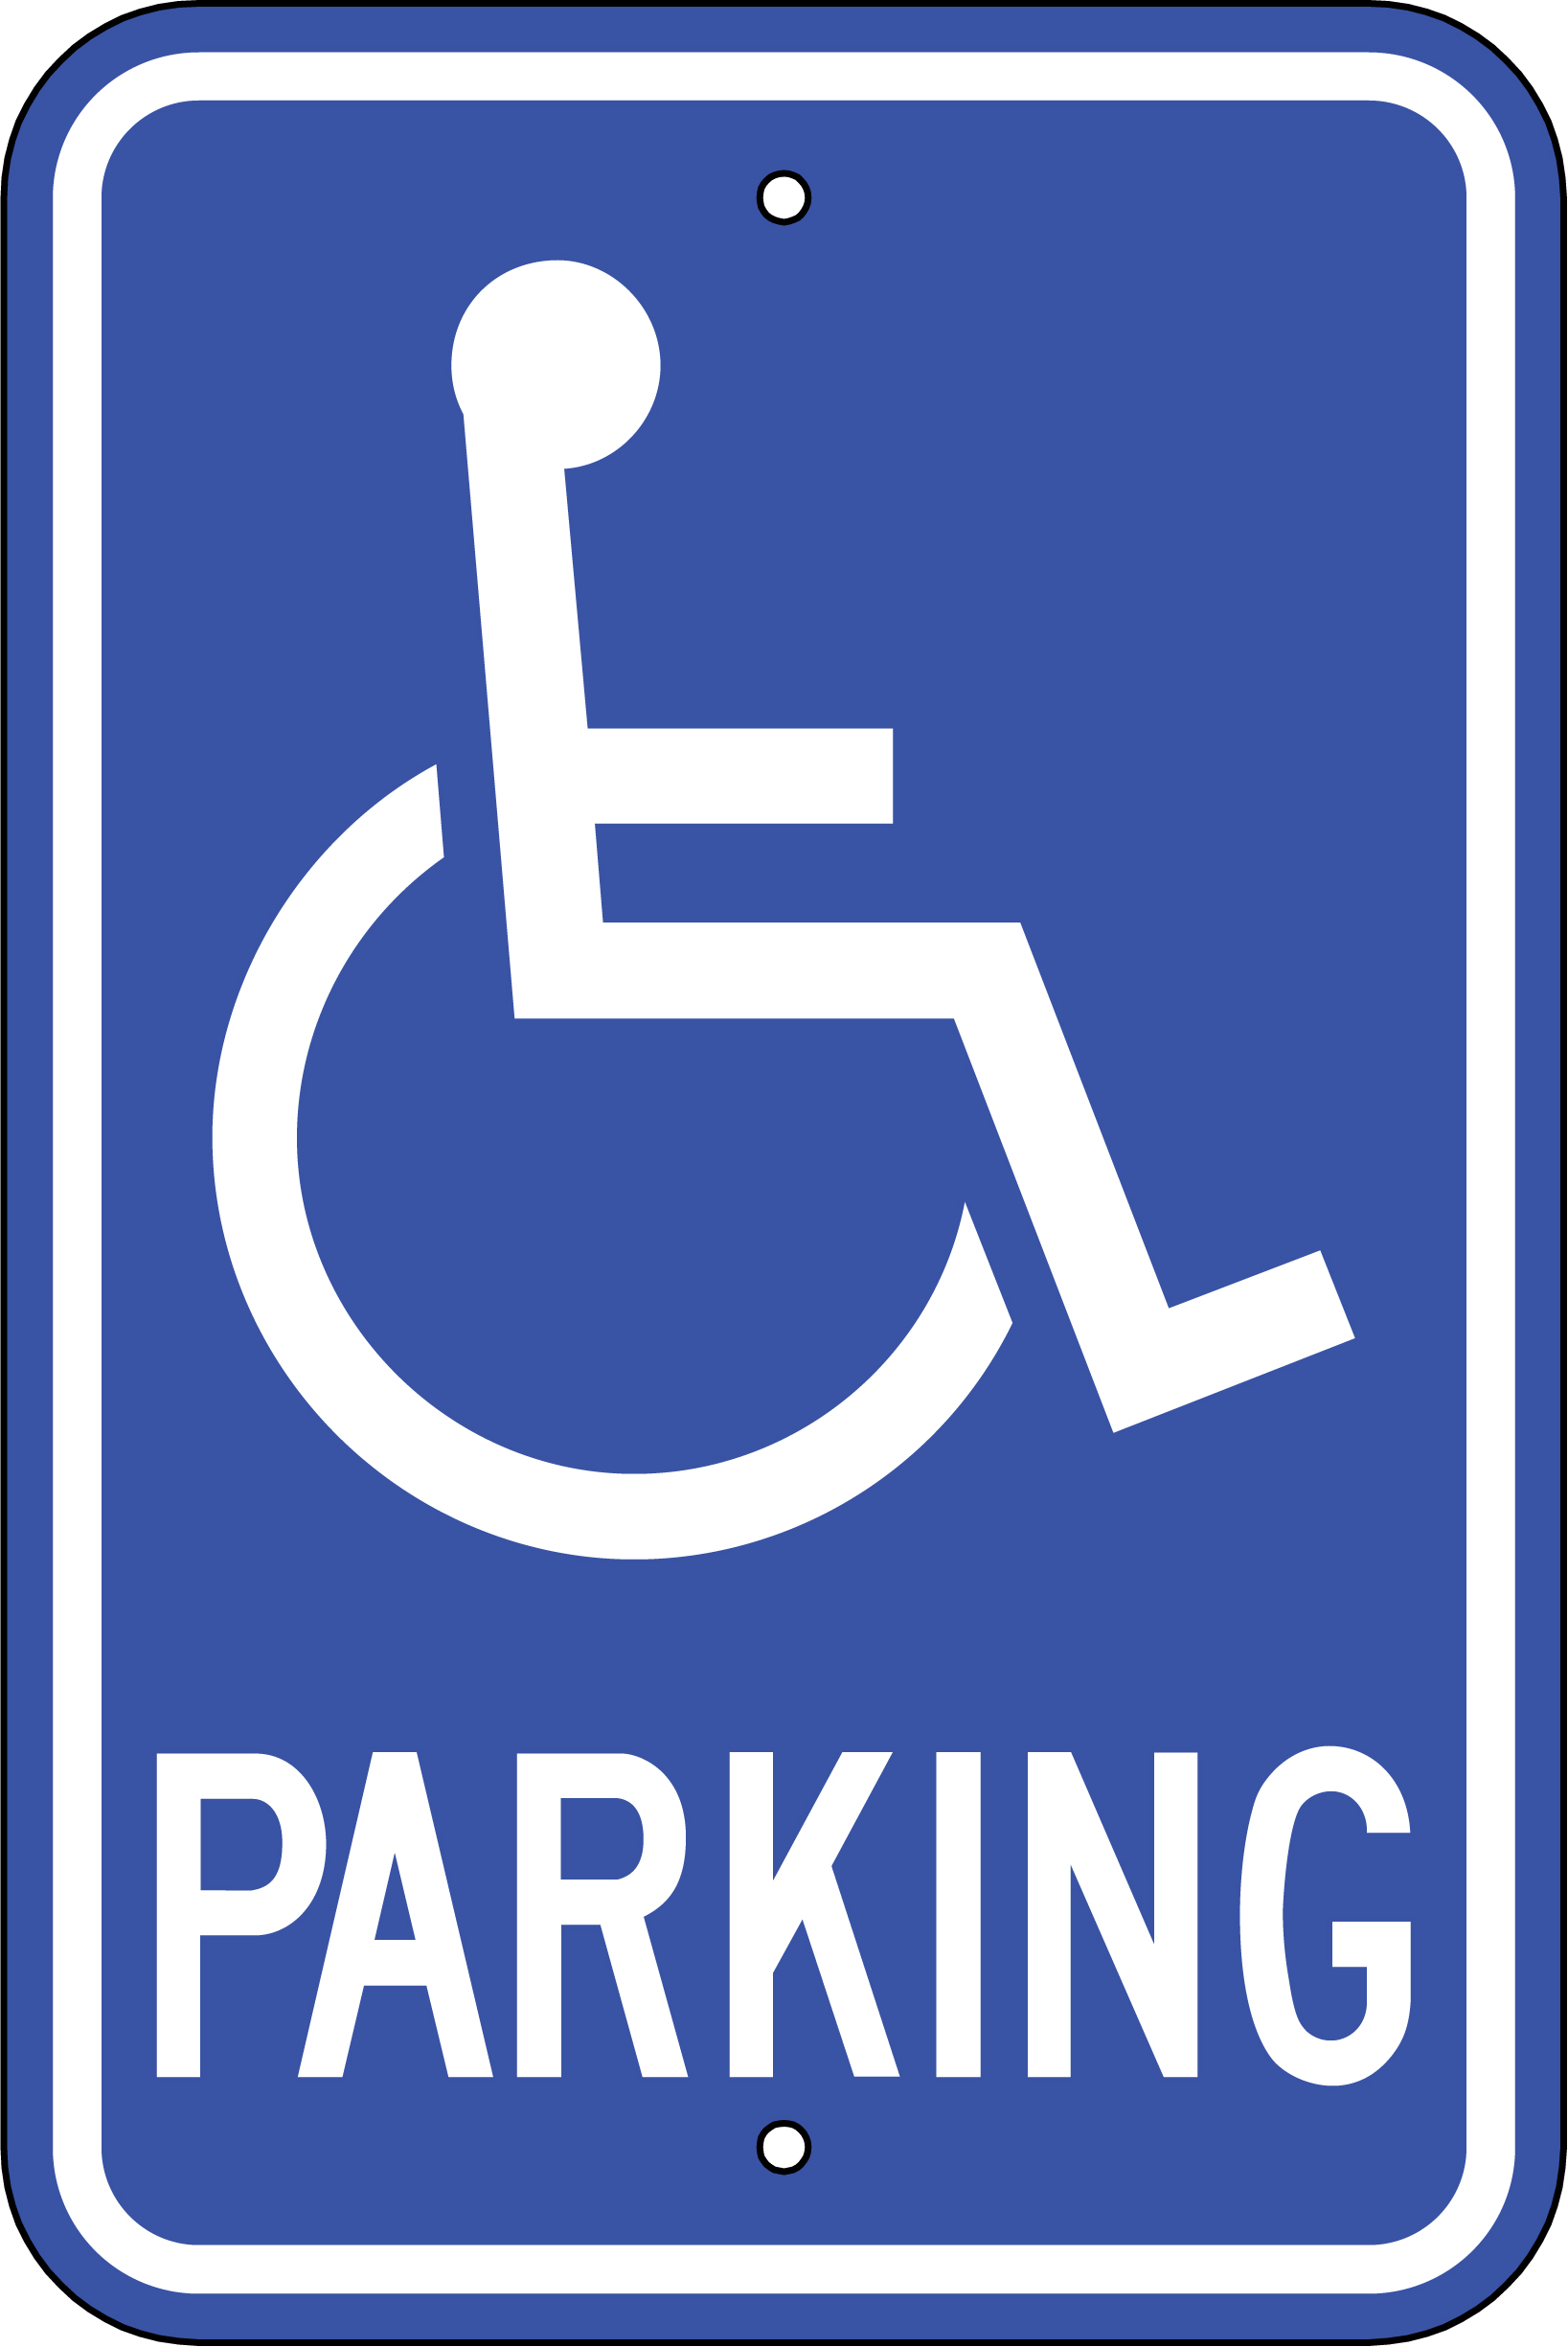 Disabled parking sign 